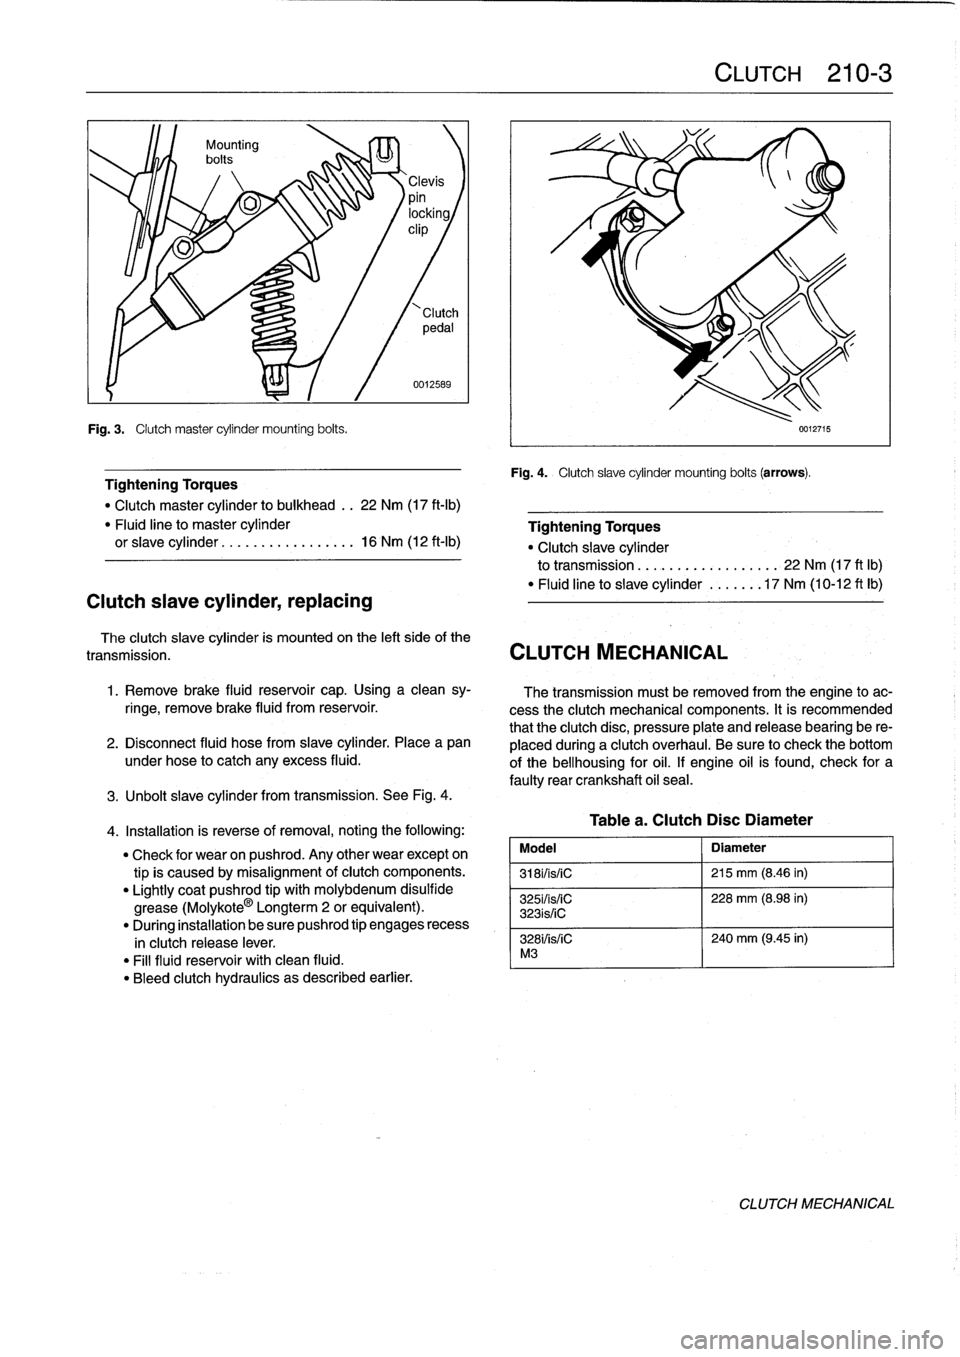 BMW M3 1995 E36 Workshop Manual Fig
.
3
.

	

Clutch
master
cylinder
mounting
bolts
.

Clutch
slave
cylinder,
replacing

0012589

Tightening
Torques

"
Clutch
master
cylinder
to
bulkhead
..
22
Nm
(17
ft-Ib)
"
Fluid
line
to
master
cy